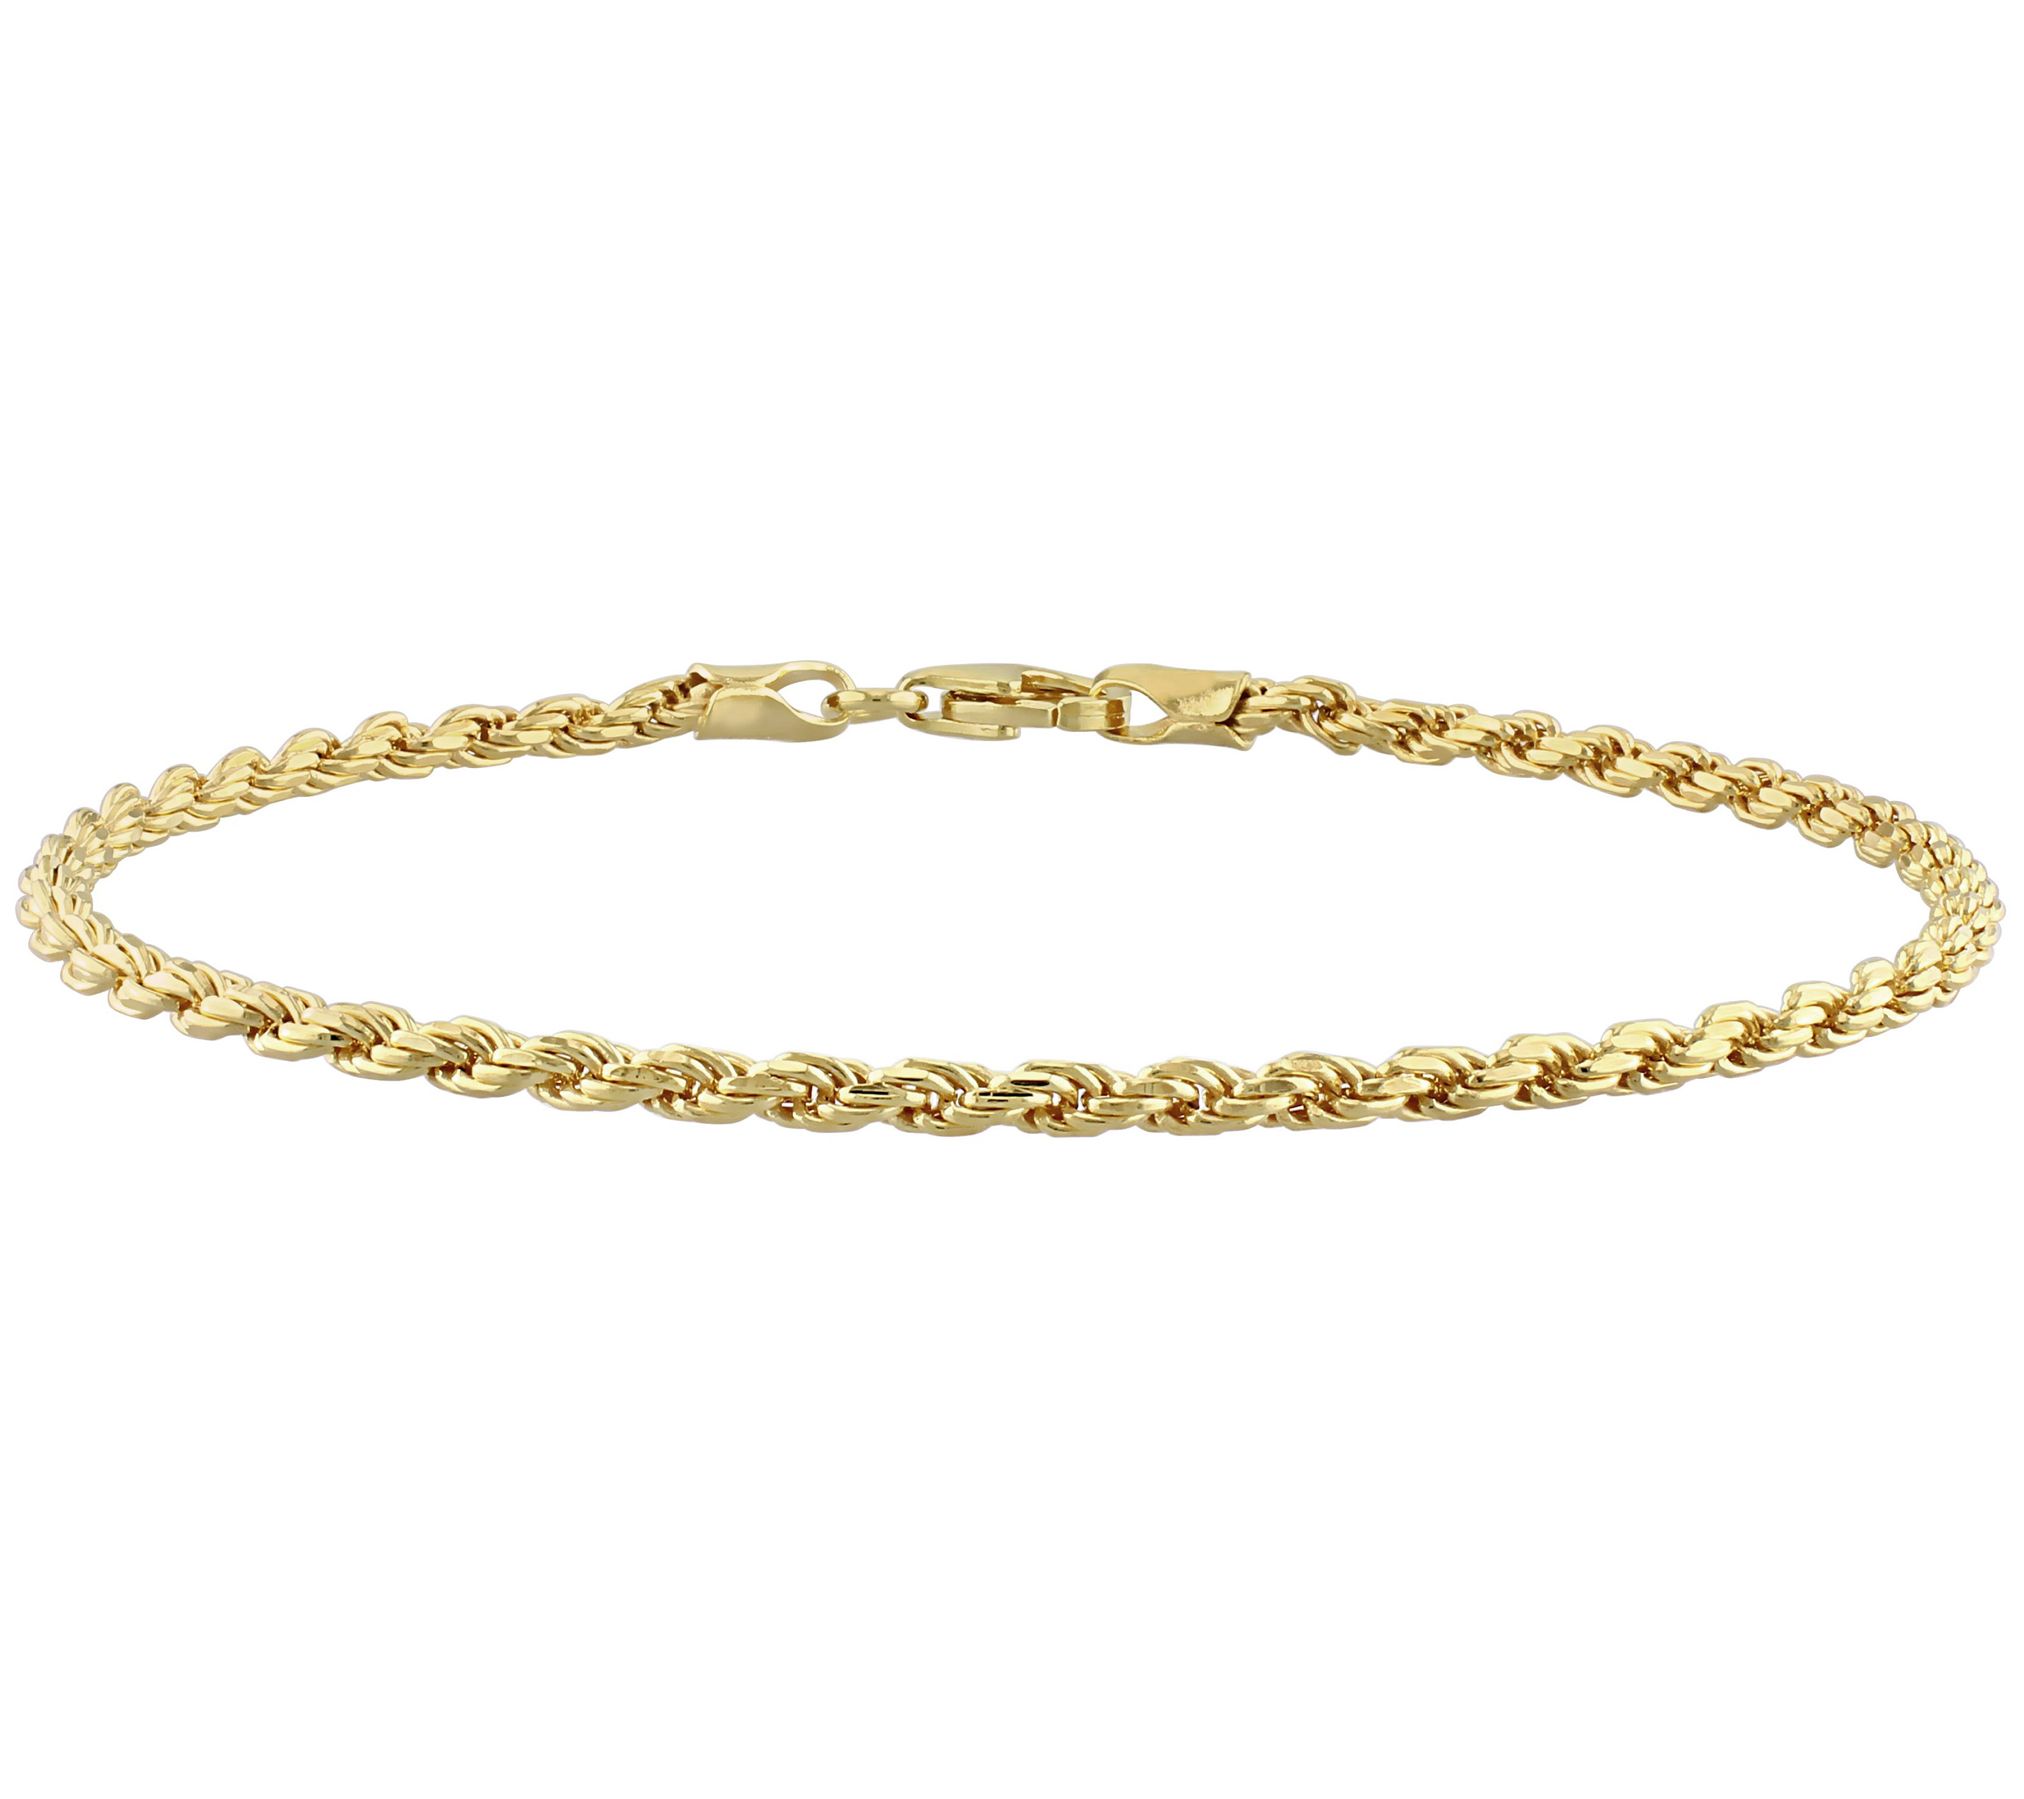 Buy 18K Real Gold Rope Chain Bracelet Yellow 18K Rope Bracelet